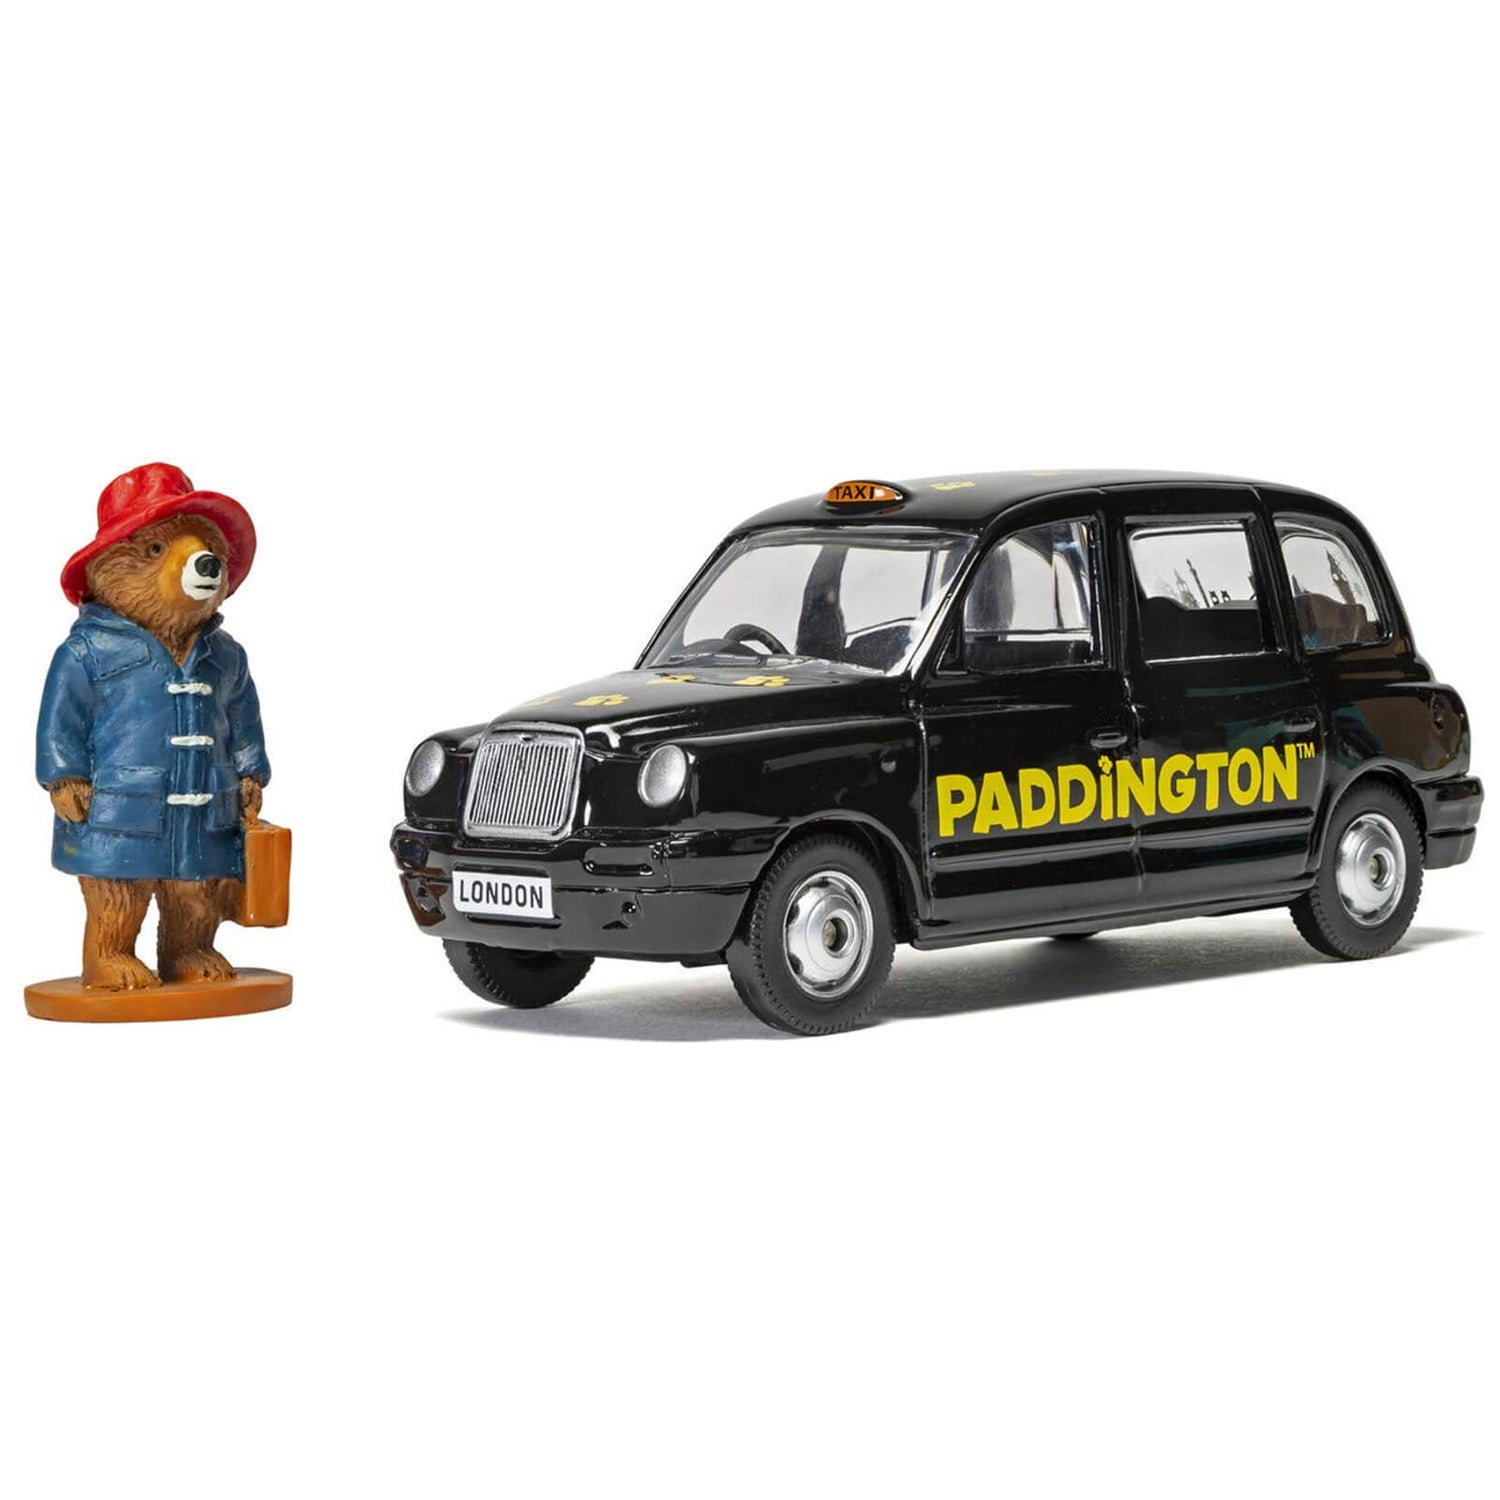 Paddington Bear London Taxi and Paddington Bear Figure Model Set - Scale 1:36